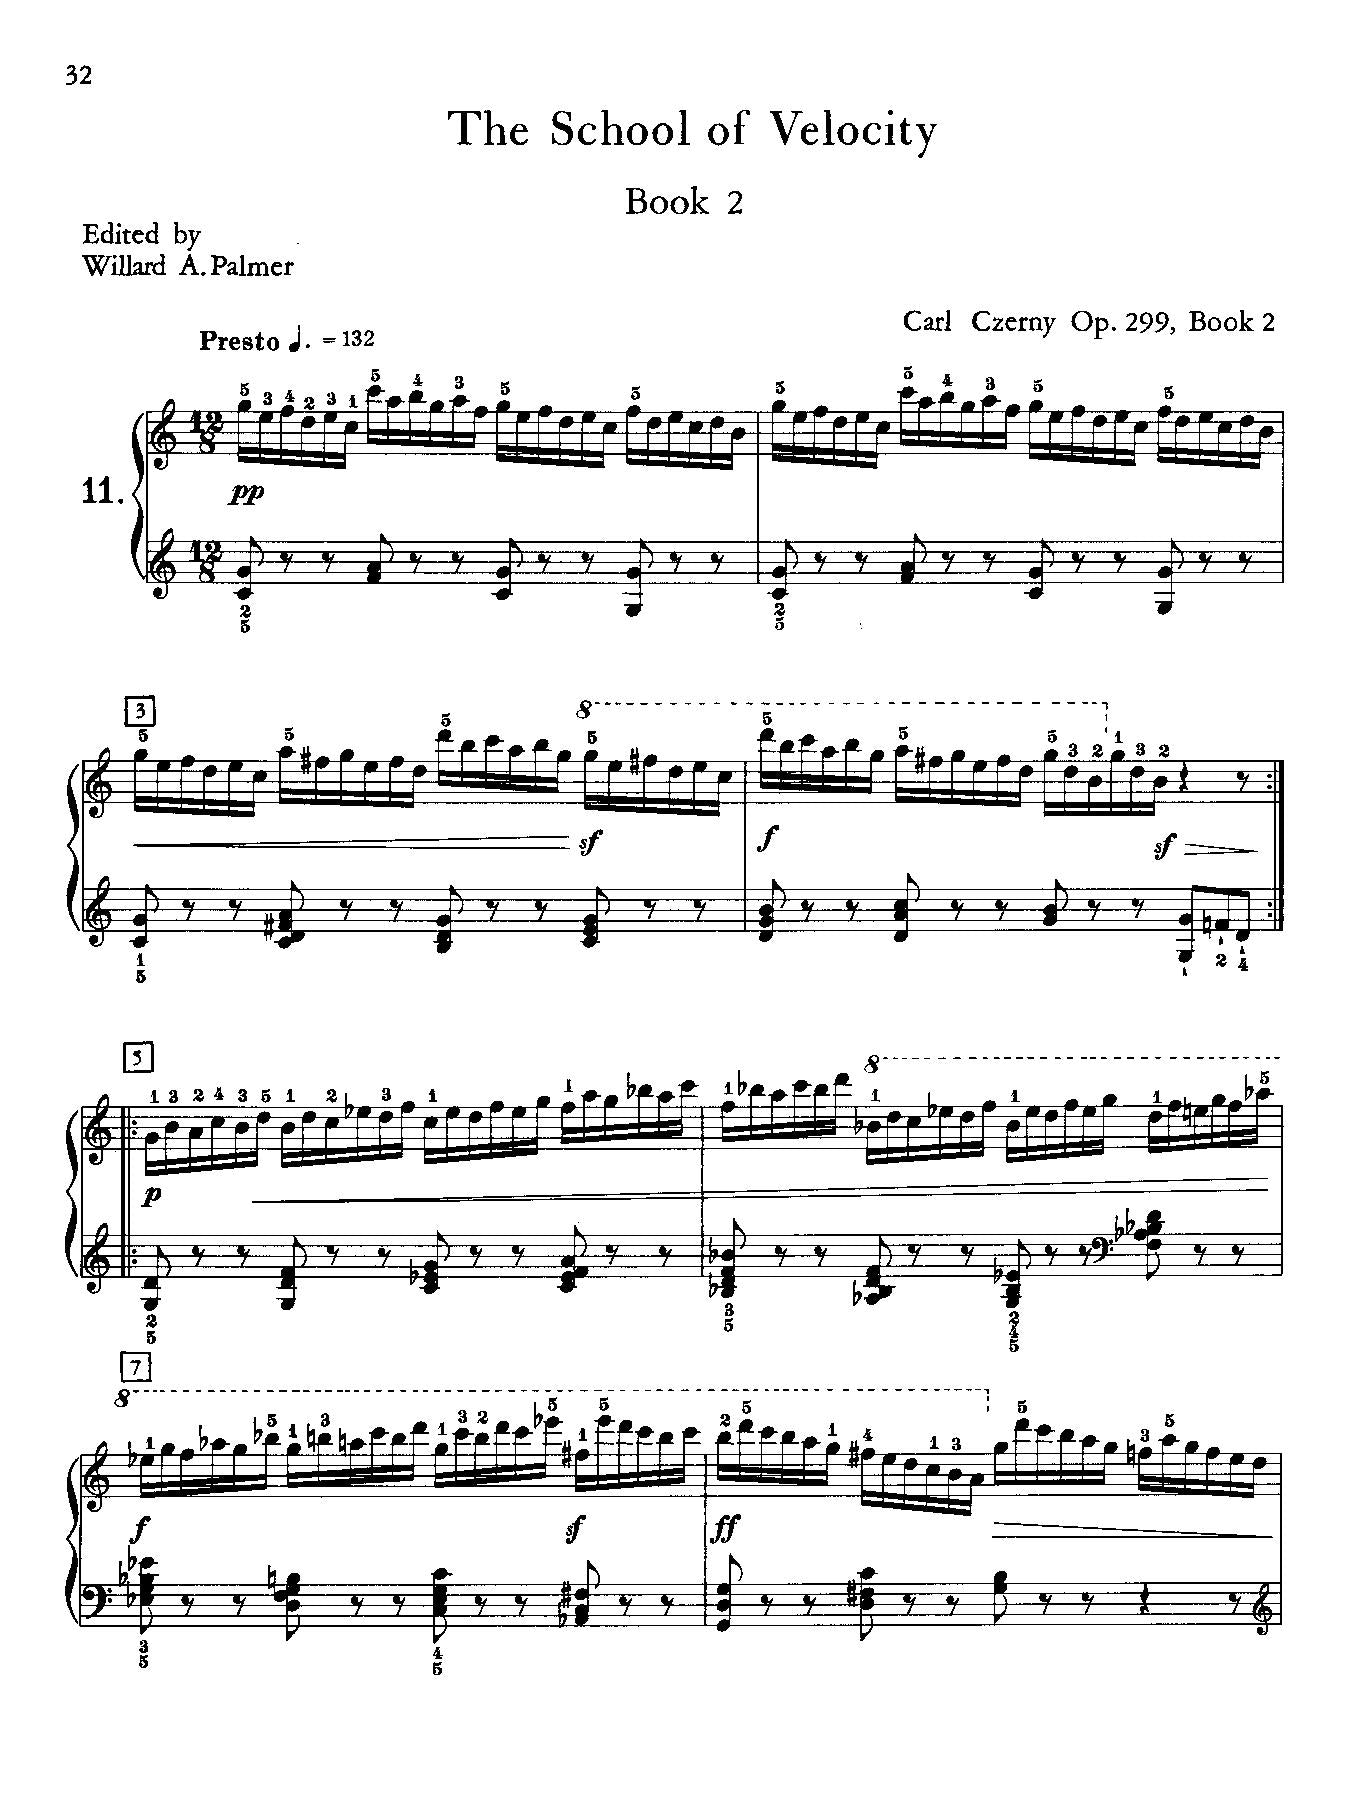 Czerny-Germer: Selected Piano Studies, Volume 1